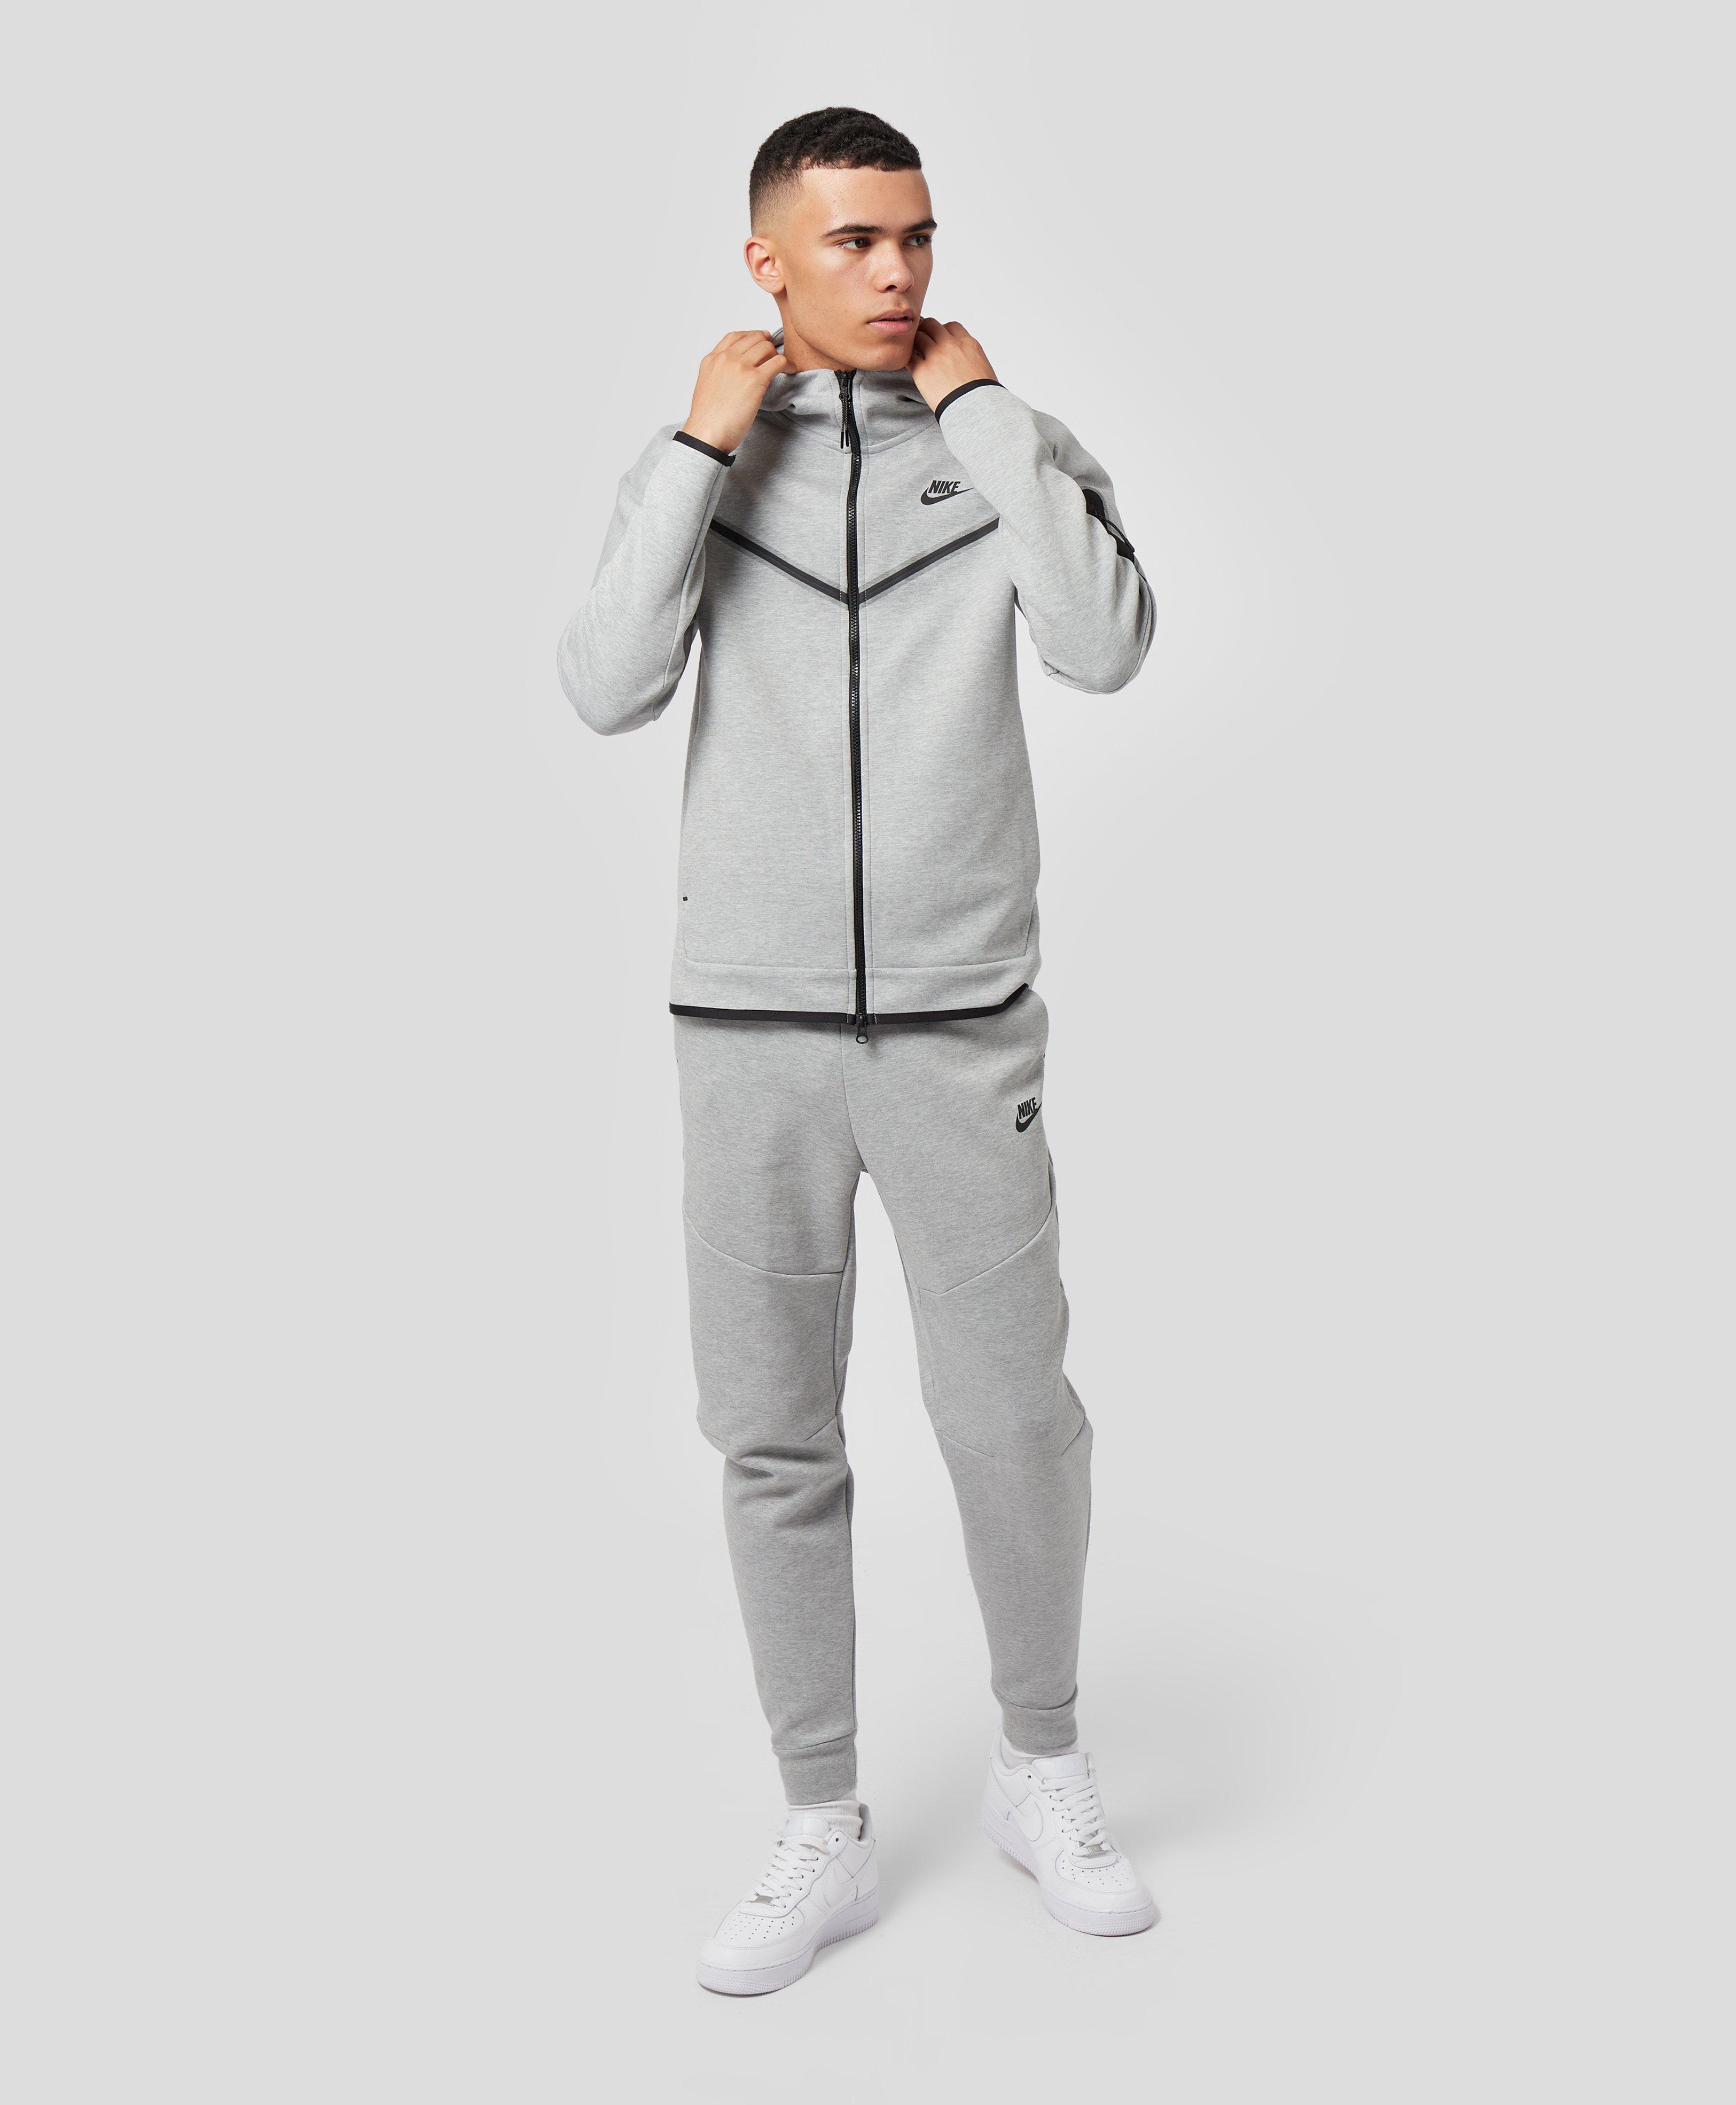 Nike Tech Fleece Full Zip Hoodie in Grey (Gray) for Men - Lyst